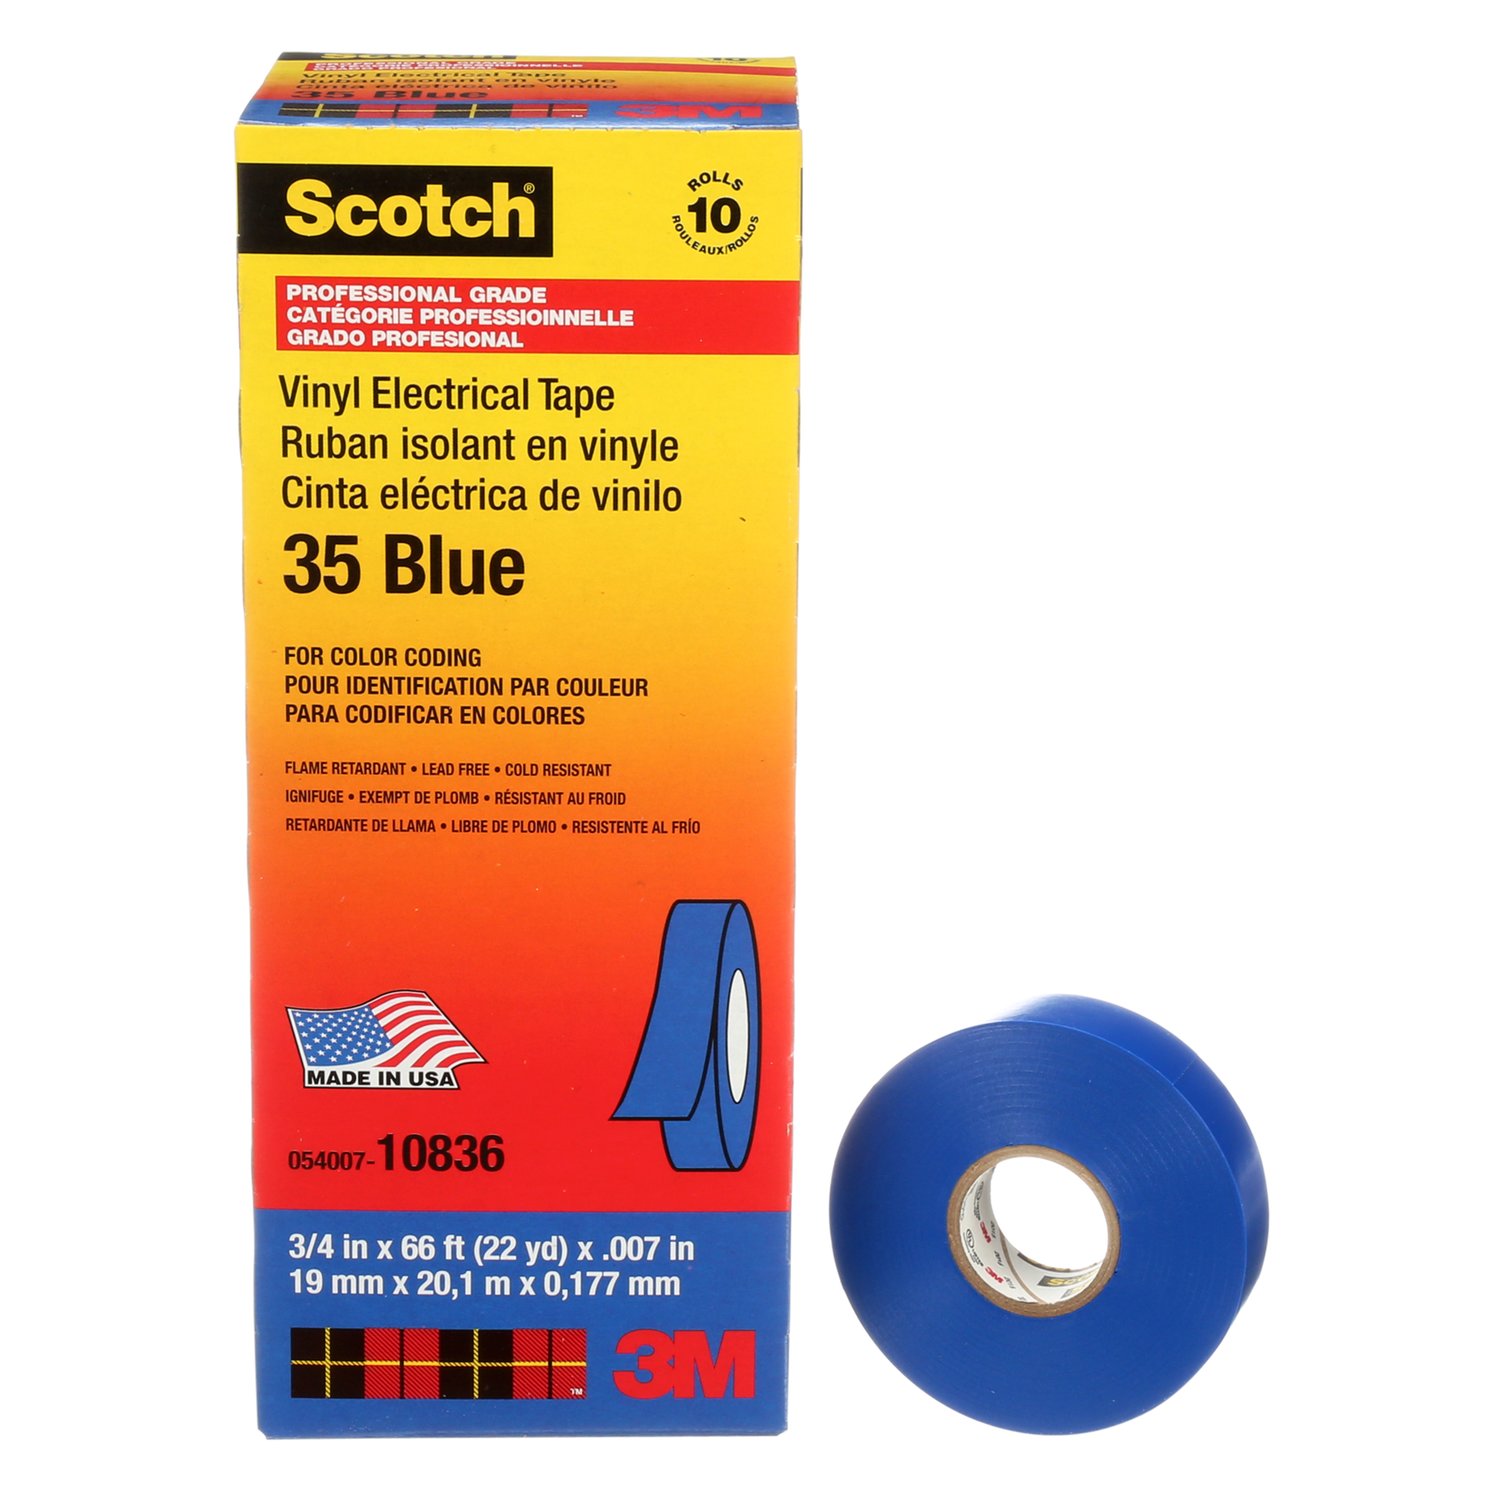 7000006095 - Scotch Vinyl Color Coding Electrical Tape 35, 3/4 in x 66 ft, Blue, 10
rolls/carton, 100 rolls/Case